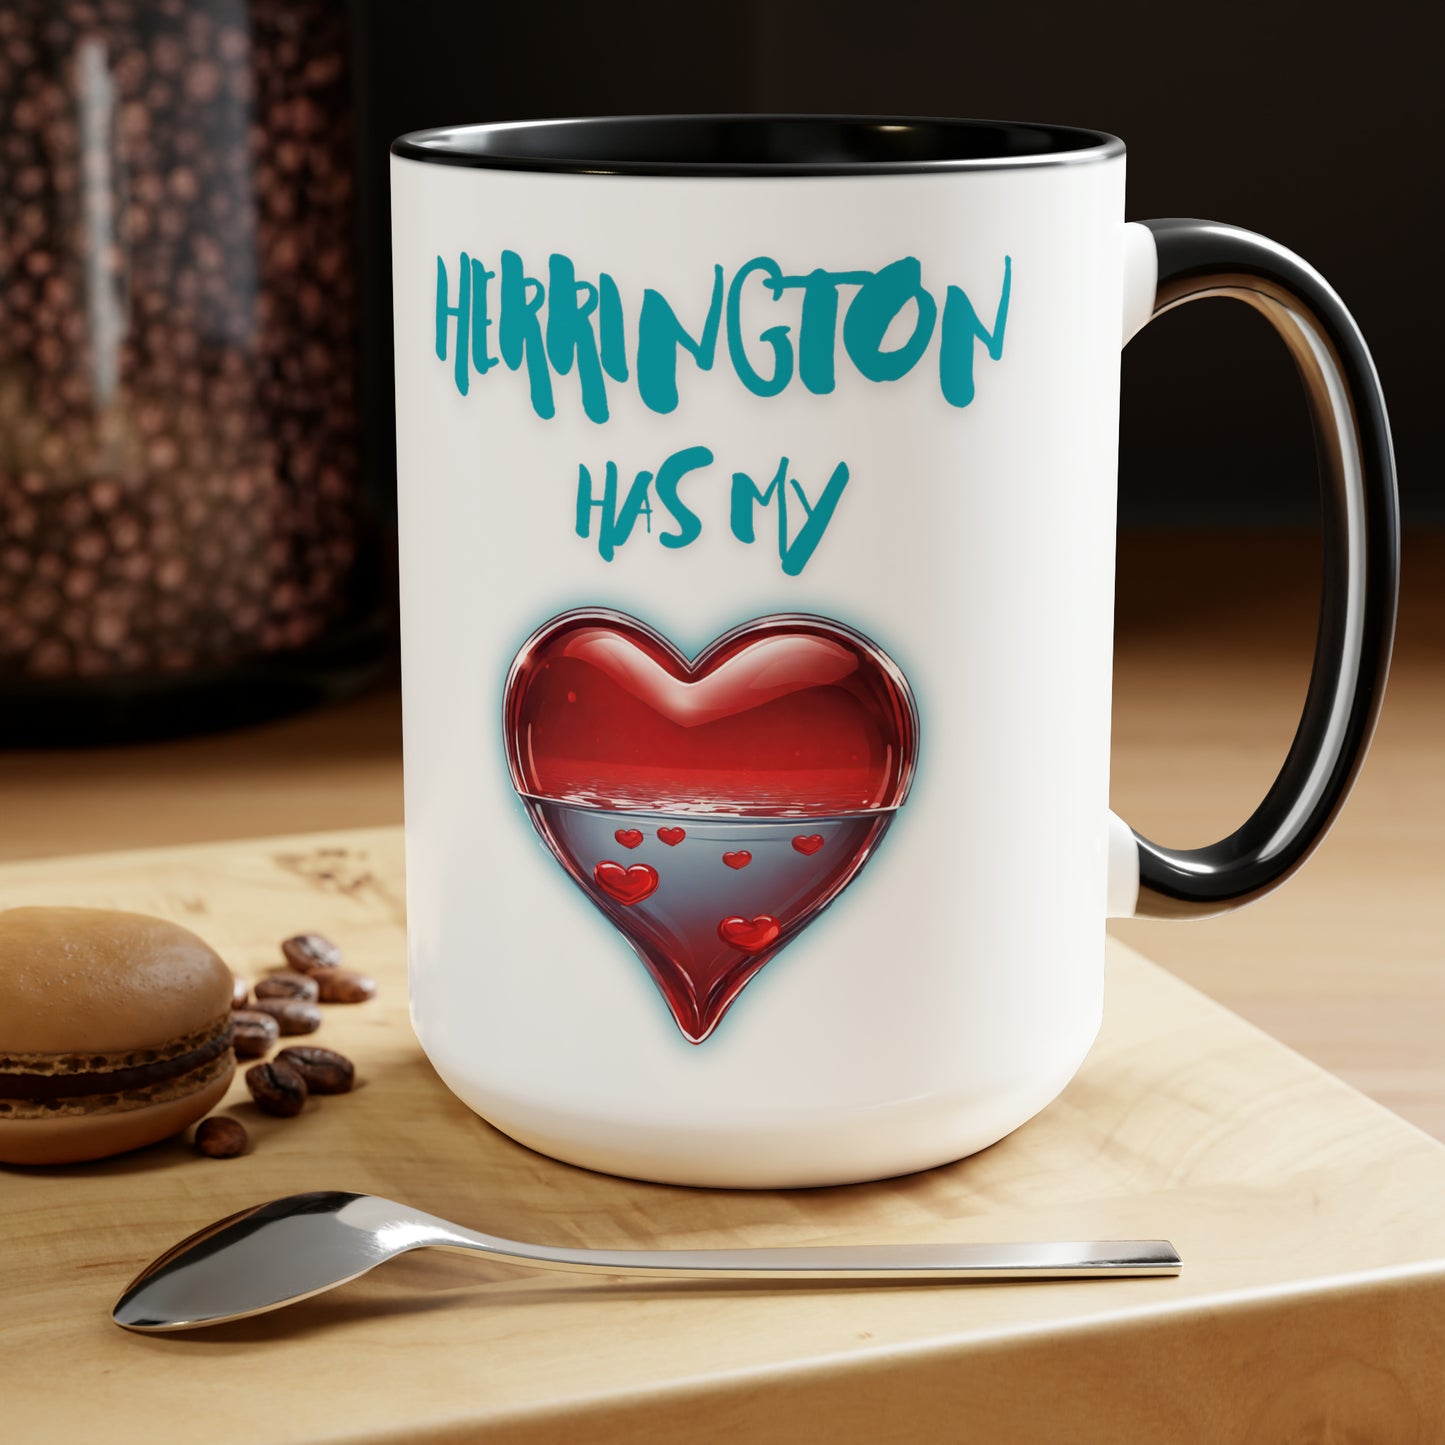 "Herrington Has My Heart" Two-Tone Biggie Coffee Mugs, 15oz